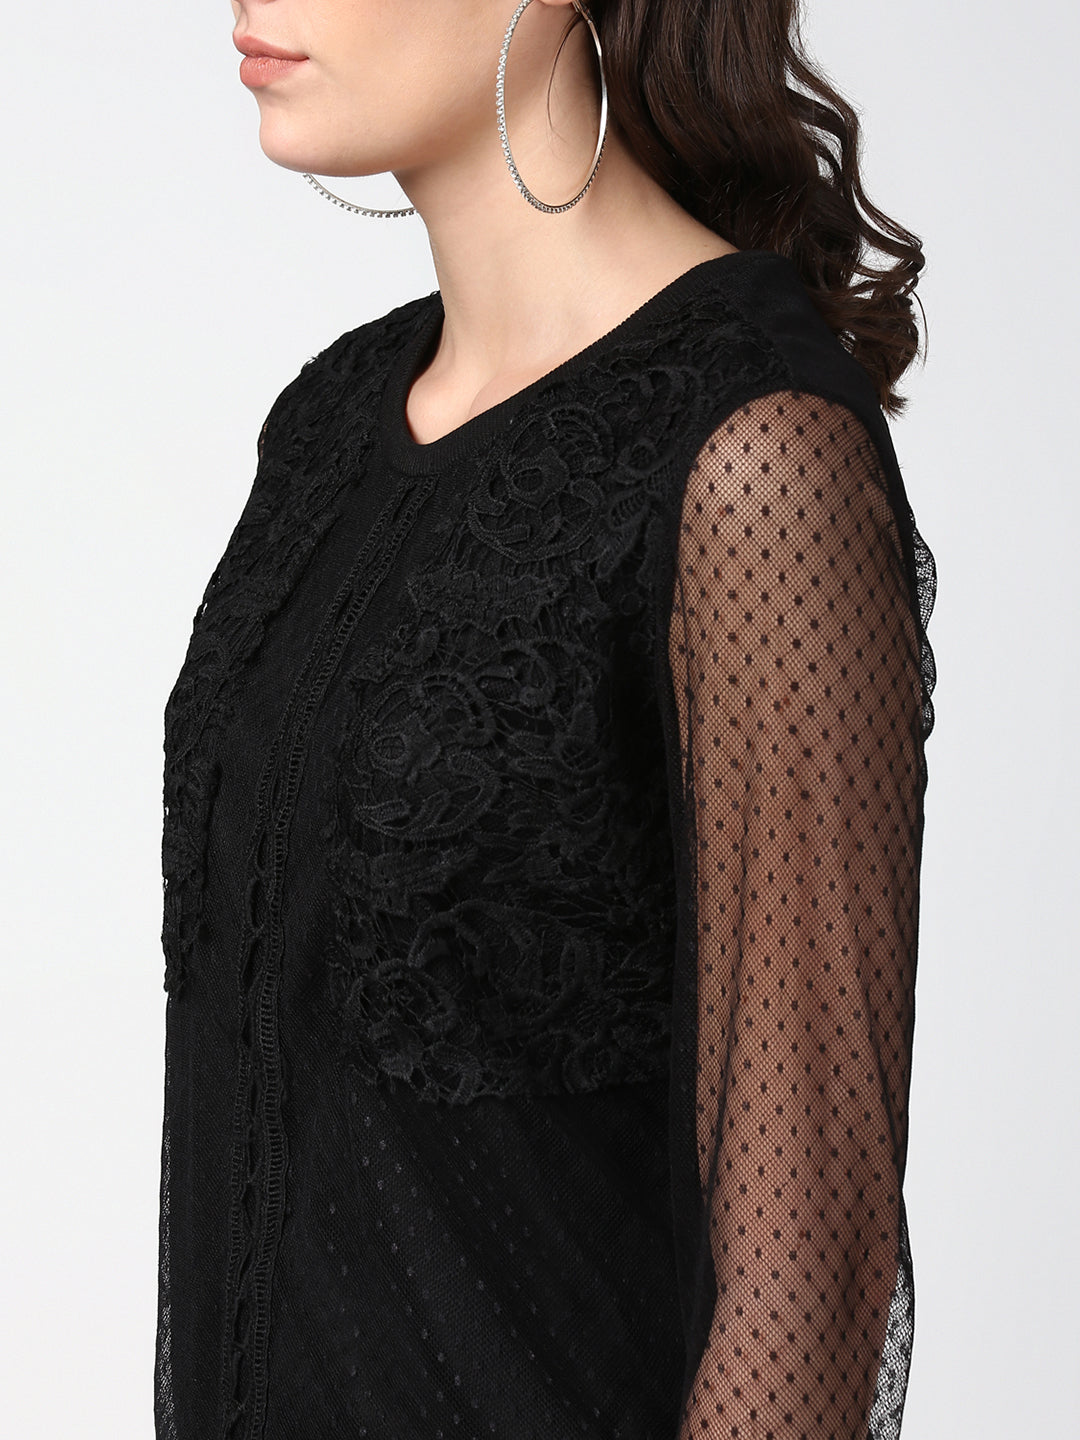 Women's Black Lace and Crochet Self Design Top